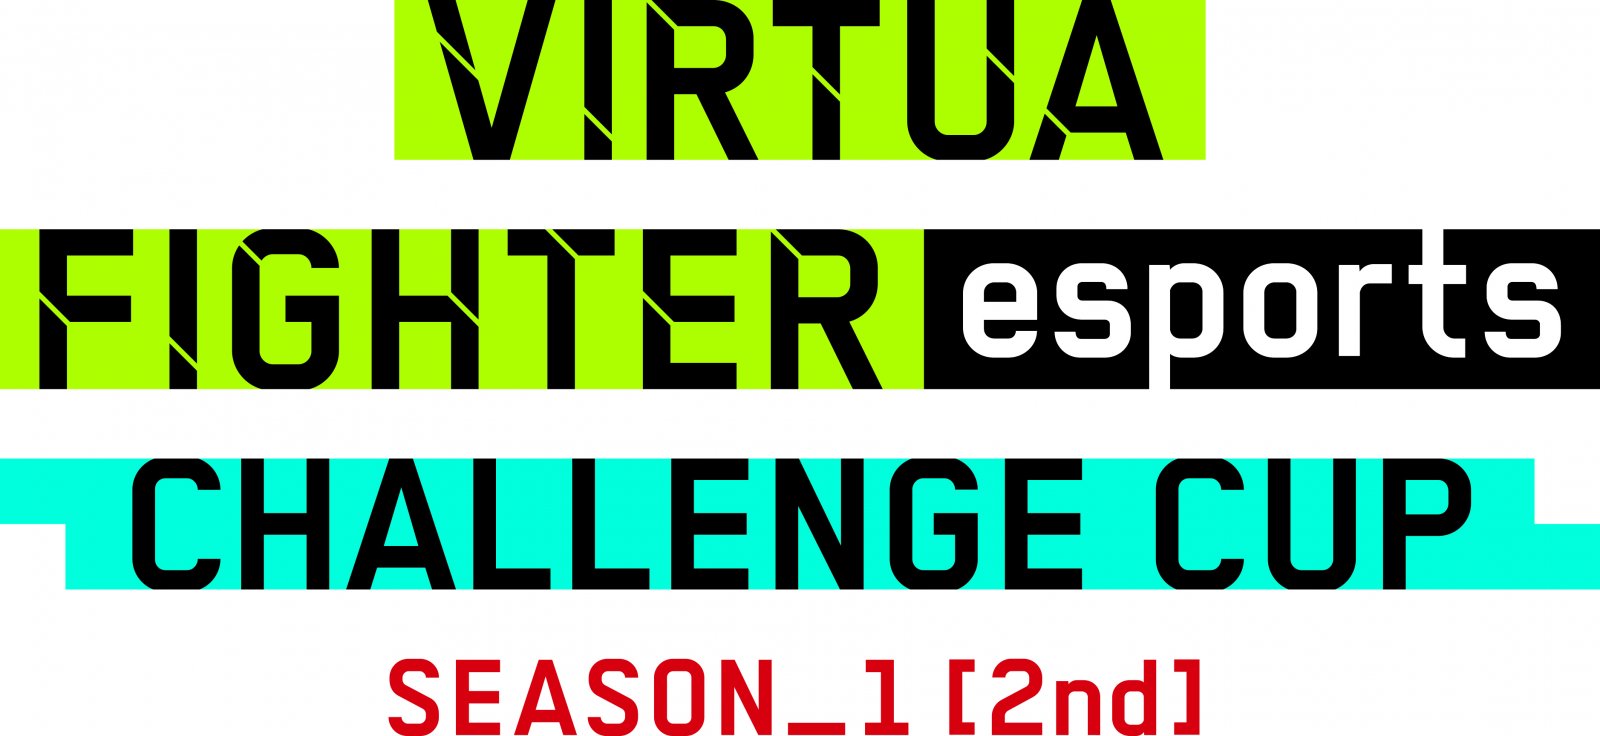 【大会情報】VIRTUA FIGHTER esports CHALLENGE CUP SEASON_1【2nd】予選【2022年10月1日】